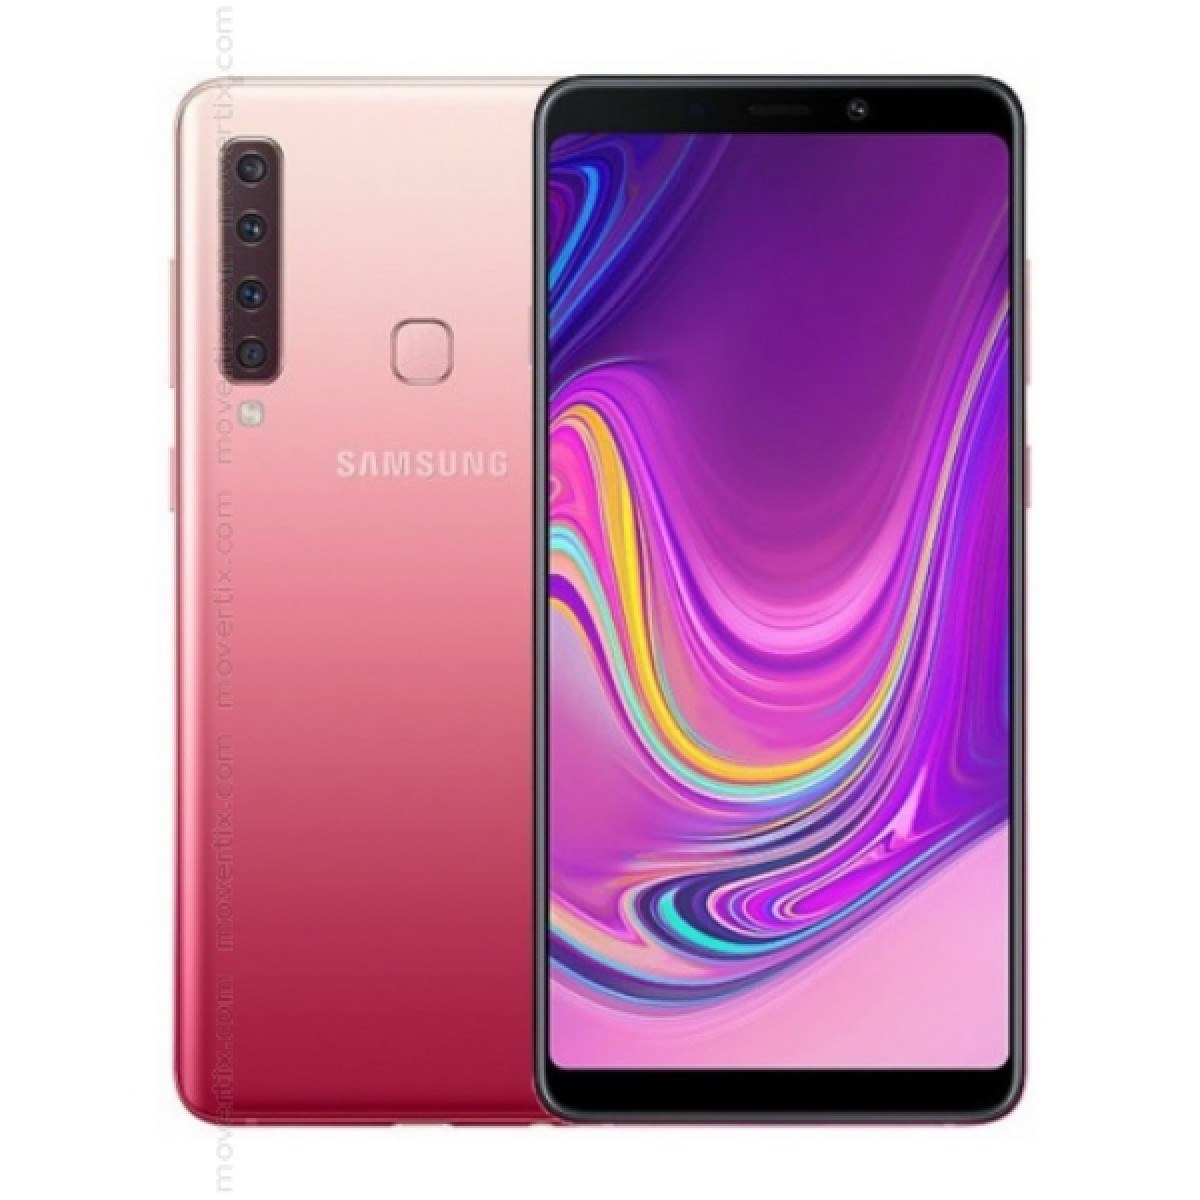 Samsung Galaxy A9 Star Pro (2018) Pink 128GB 6GB RAM SDM660